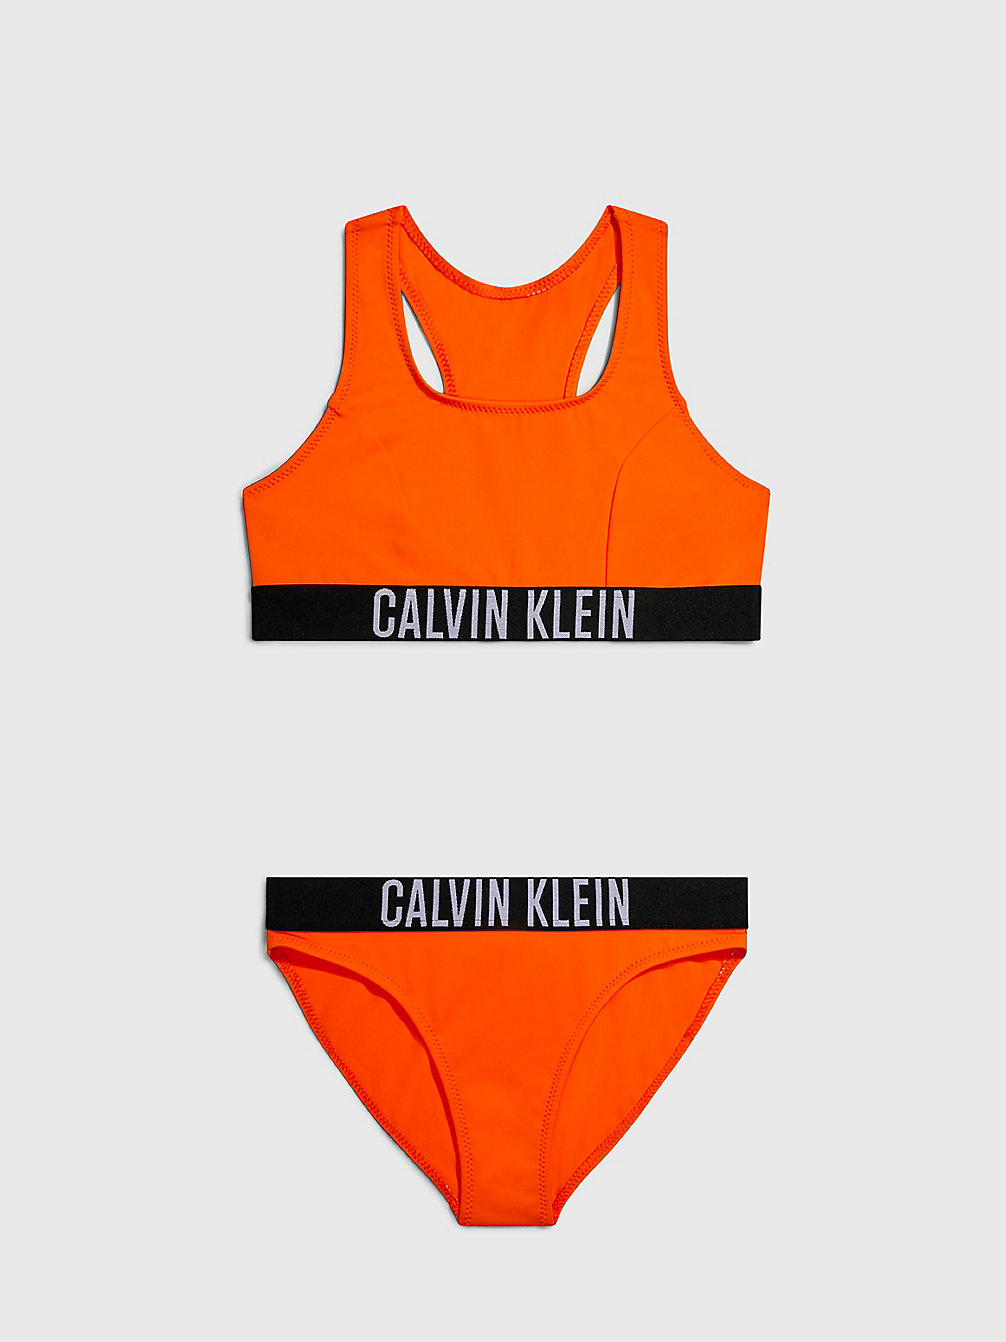 VIVID ORANGE > Meisjesbralette Bikini - Intense Power > undefined girls - Calvin Klein